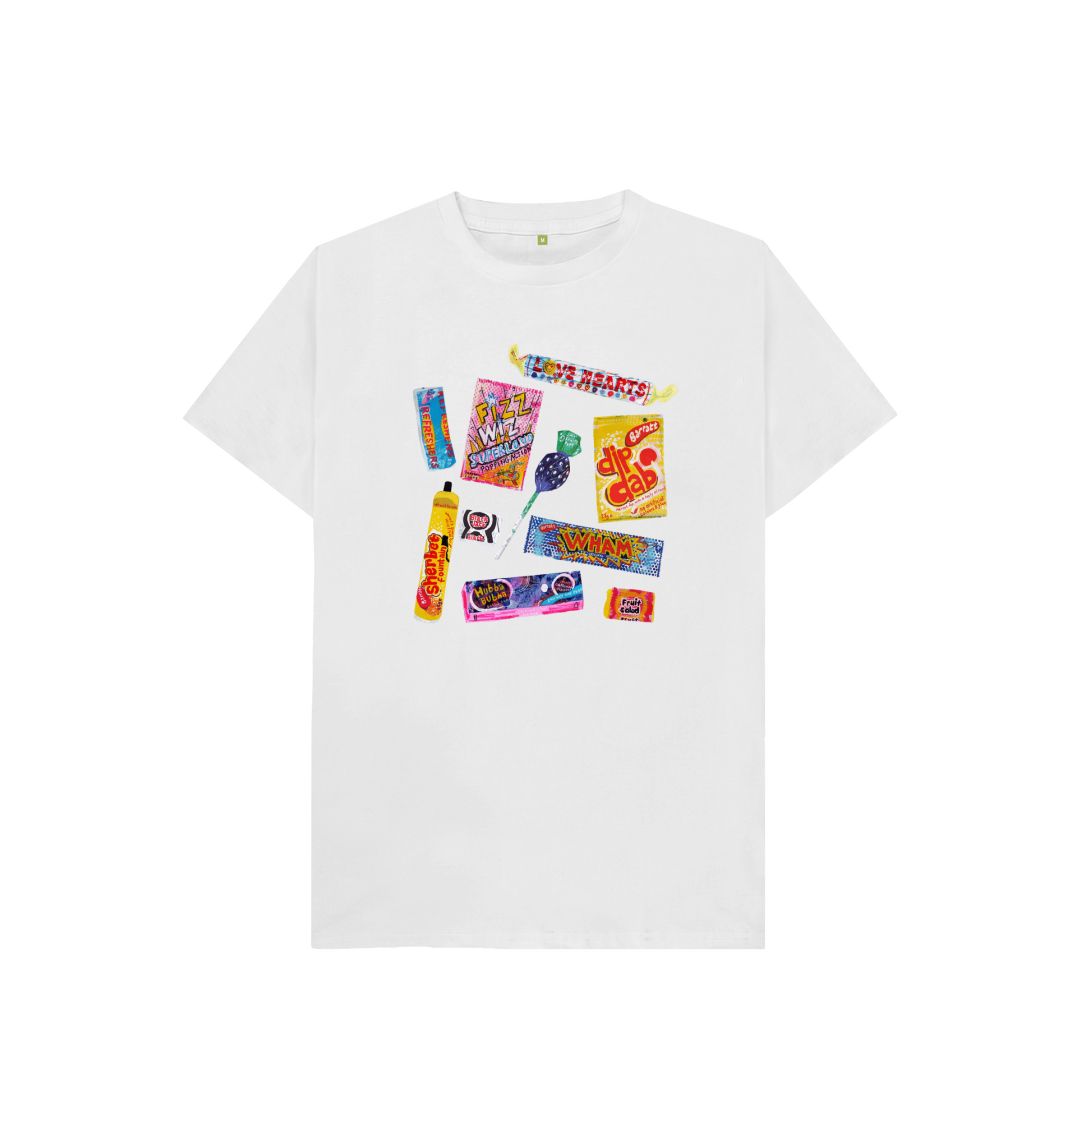 after school feast organic kid's tee - Printed Kids T-Shirt - Sarah Millin